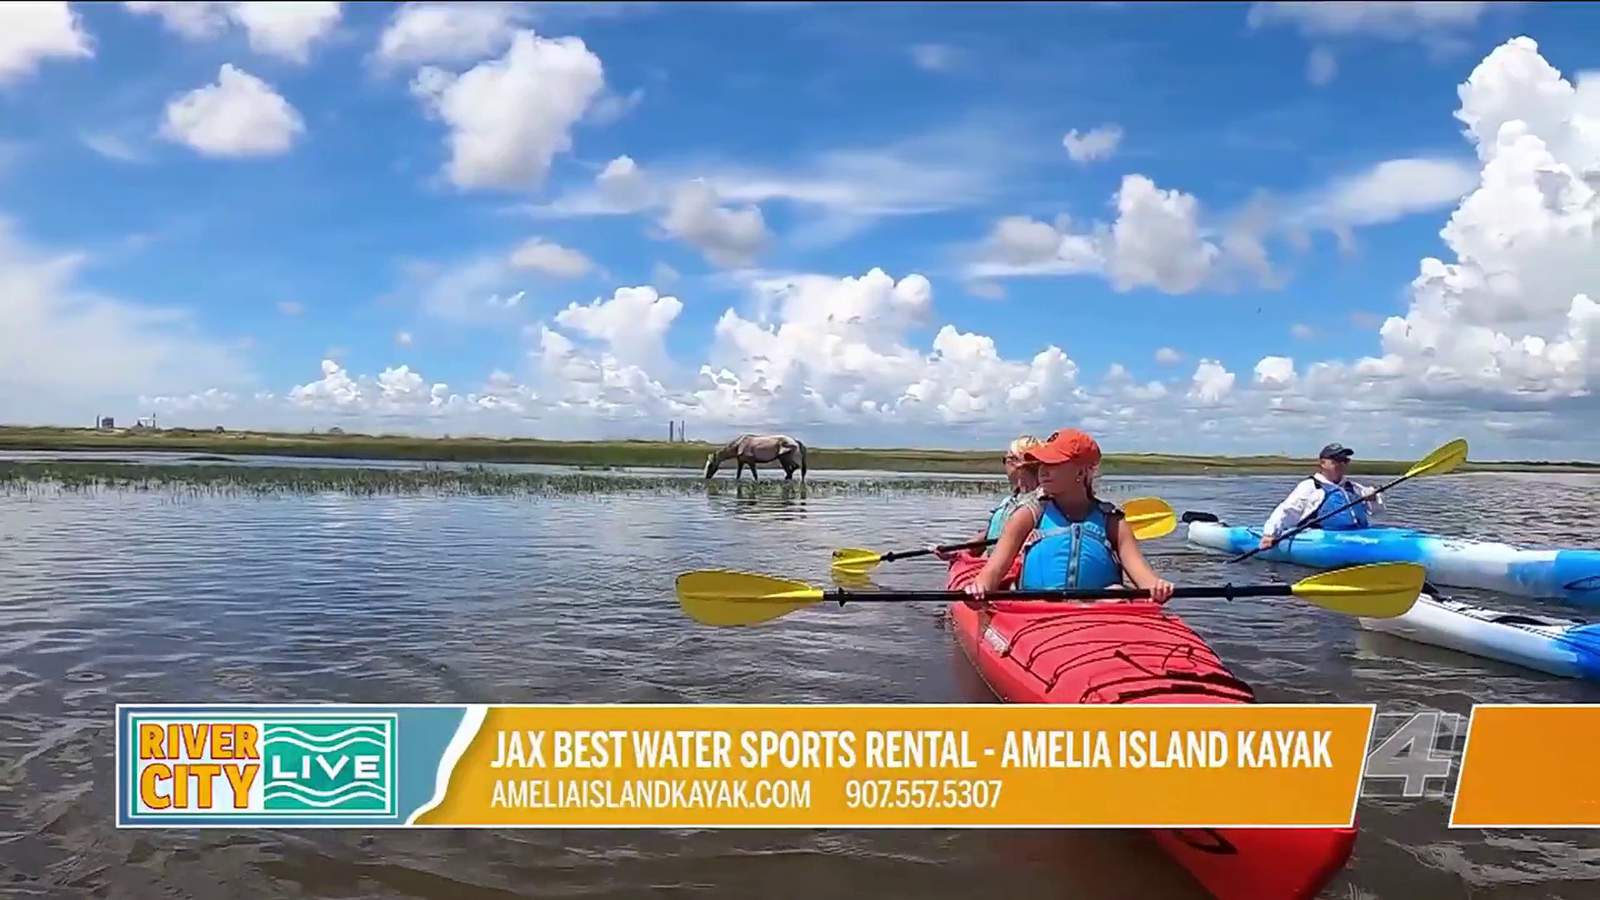 Amelia Island Kayak Excursions voted JaxBest water sports rental